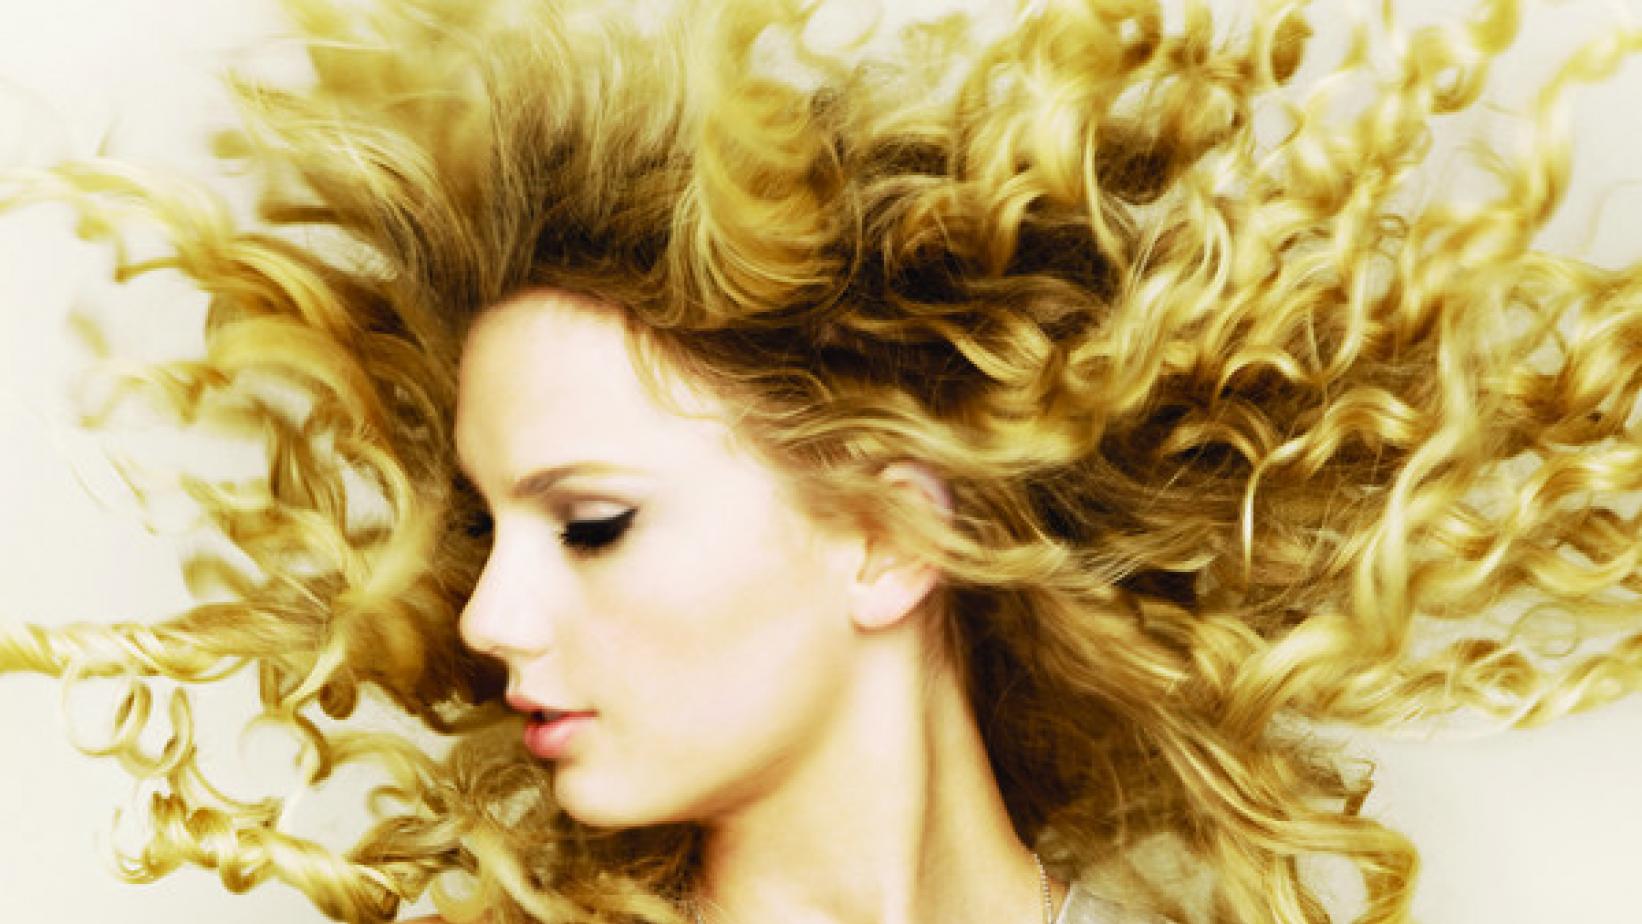 Album Review: Taylor Swift